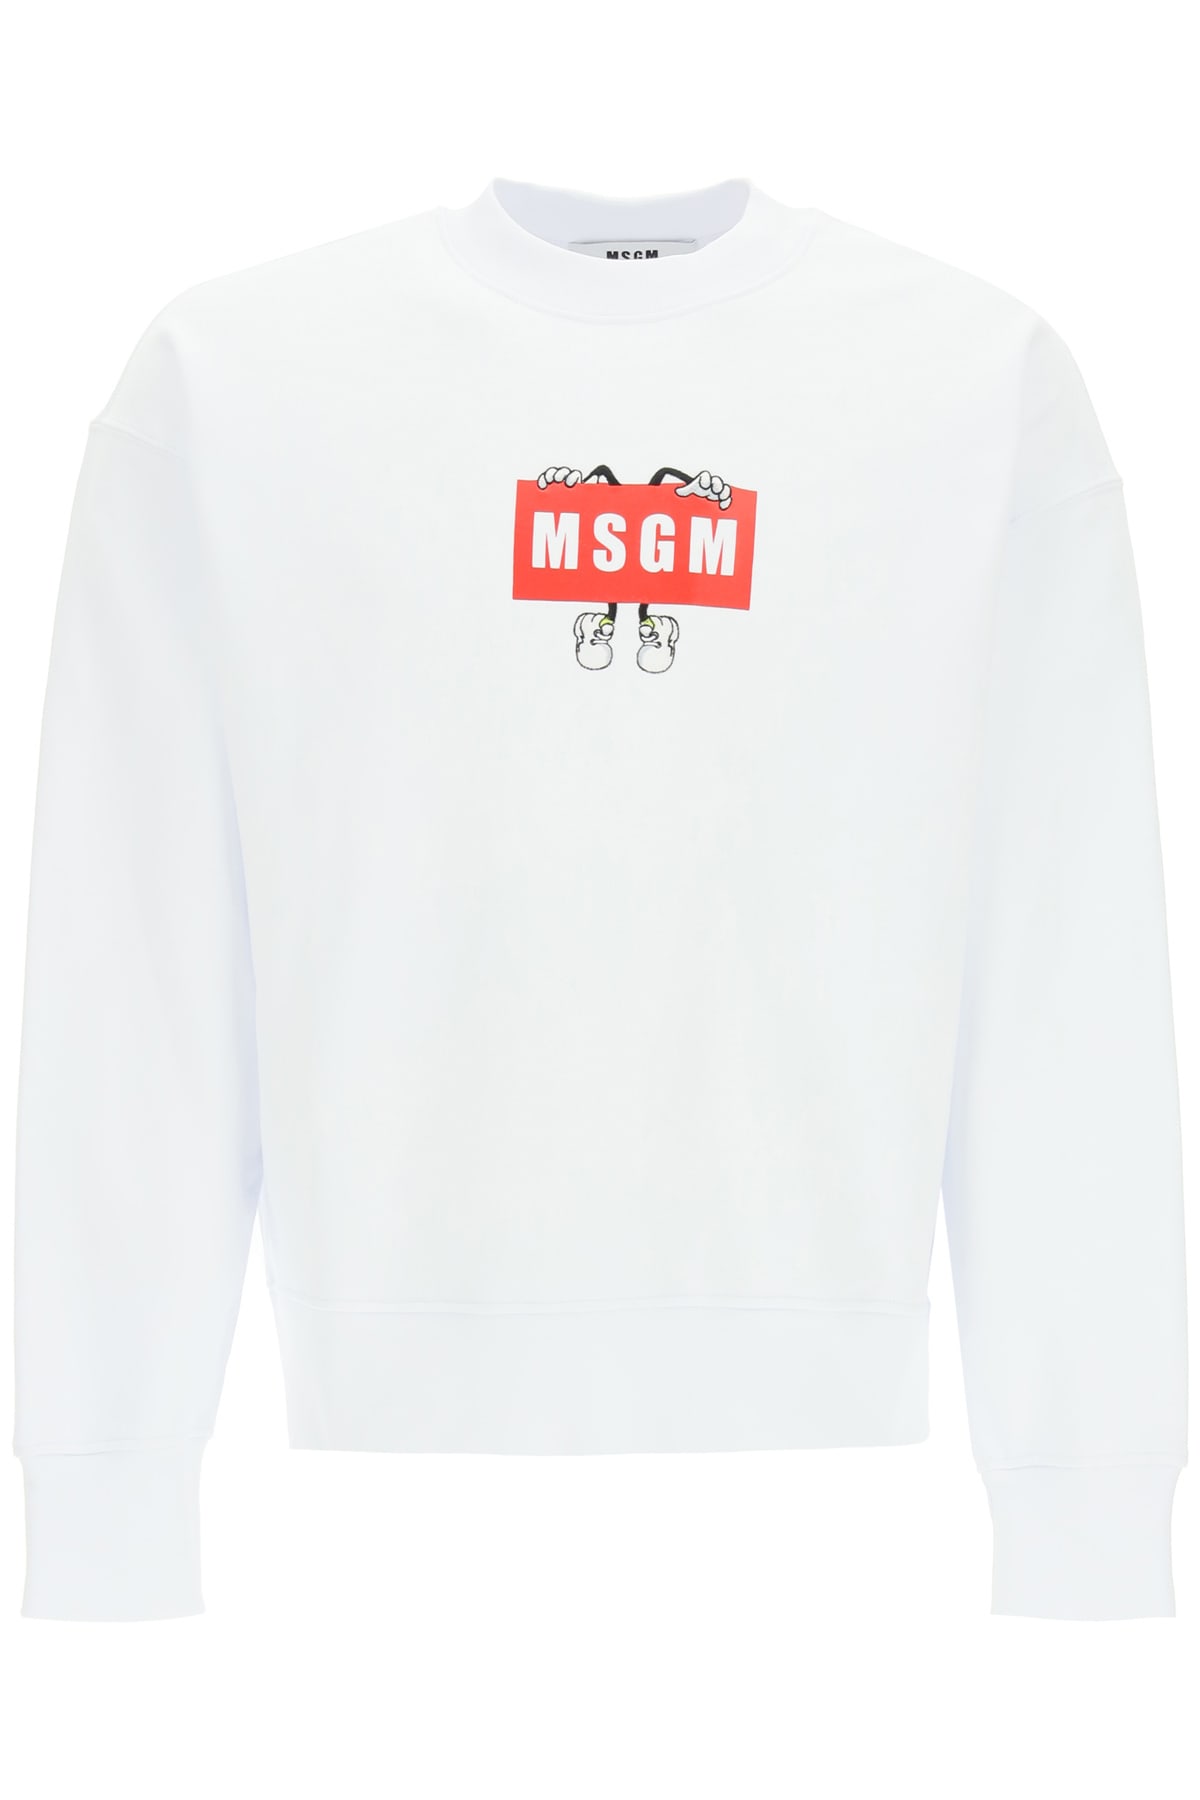 MSGM Comics Logo Crew Neck Sweatshirt